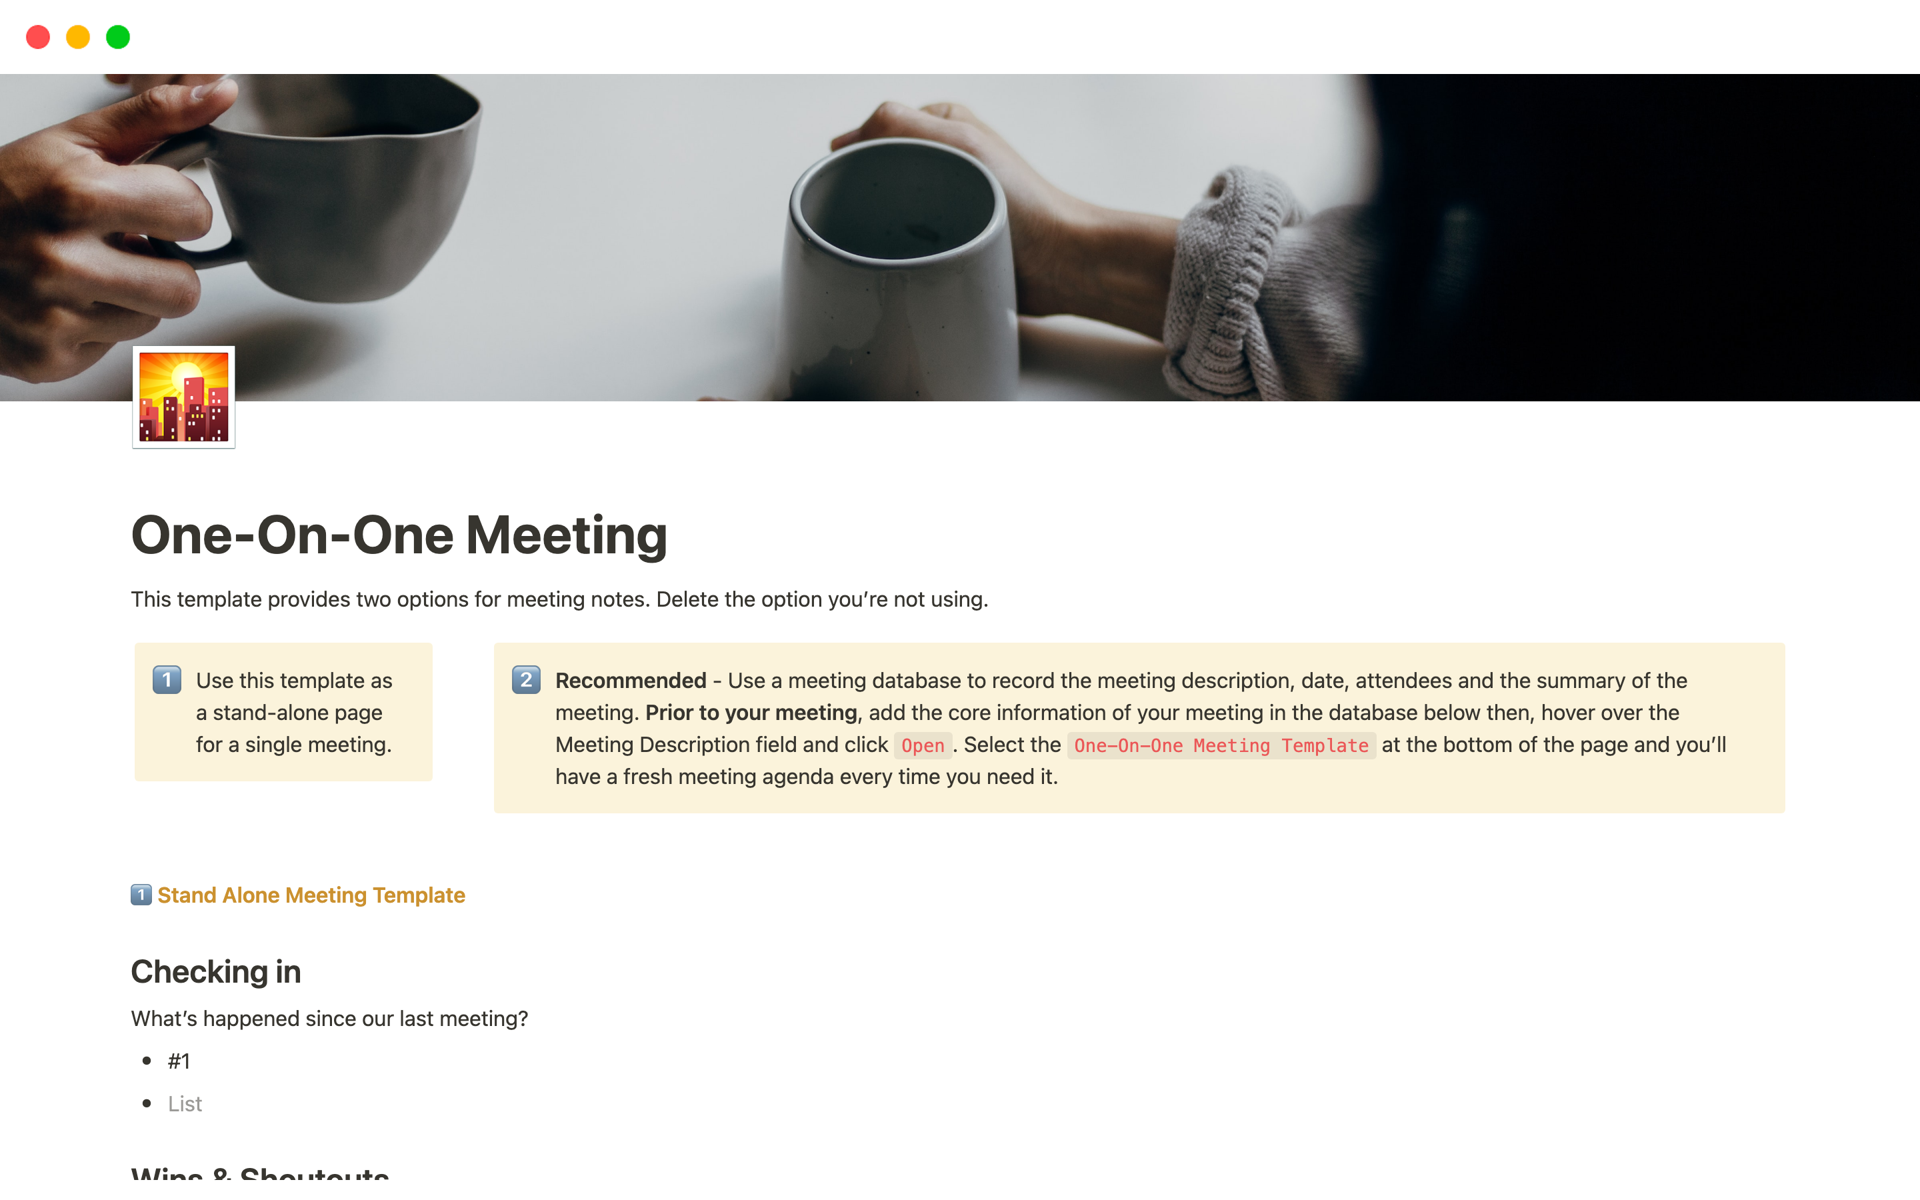 Aperçu du modèle de One-On-One Meeting